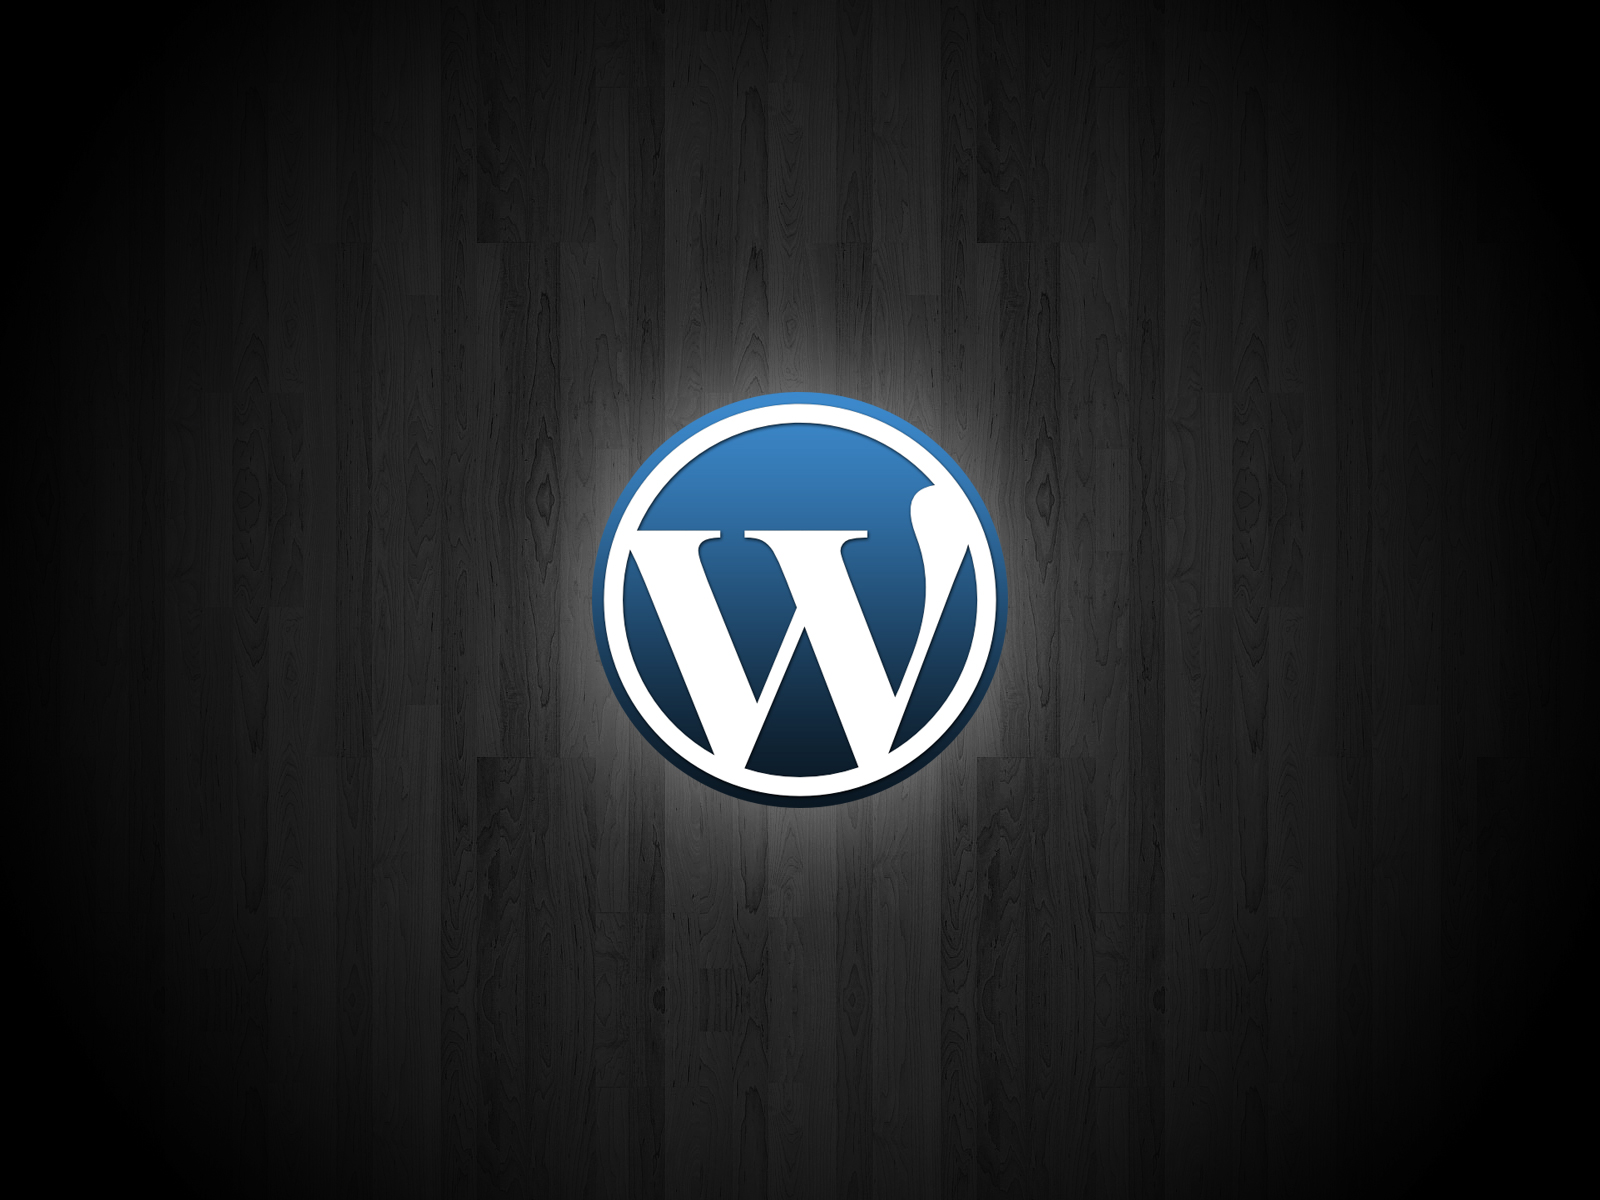 Introducing WordPress Business Accounts